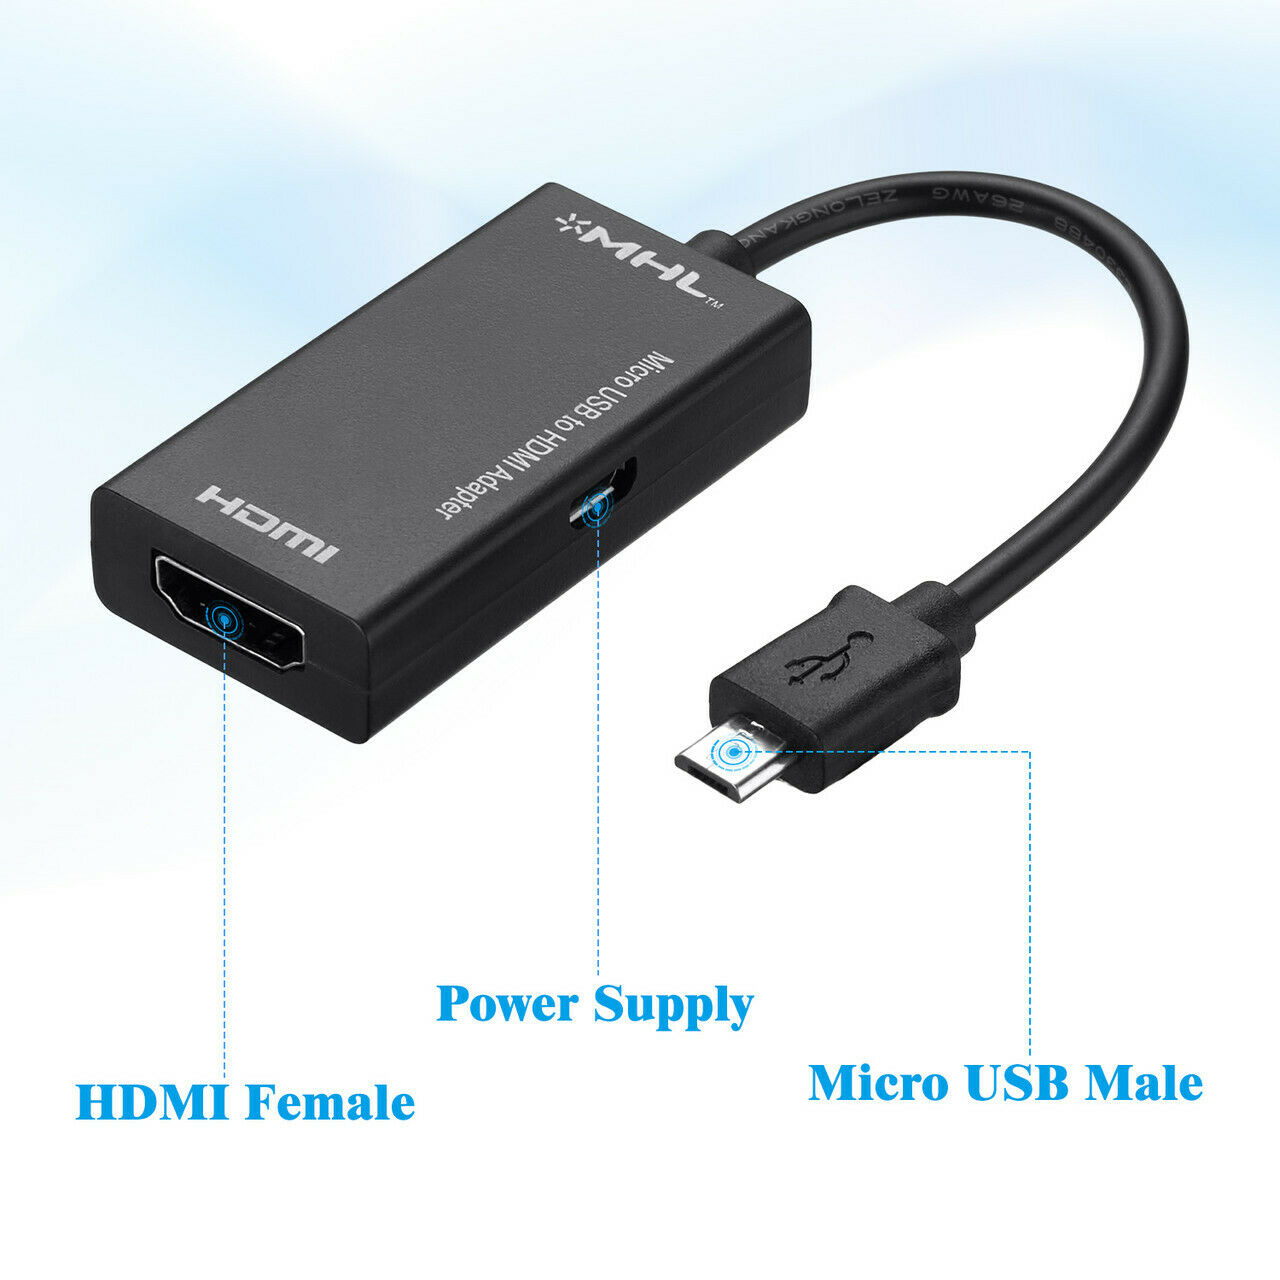 Переходник (кабель - адаптер) с MHL Micro USB на HDMI / VGA